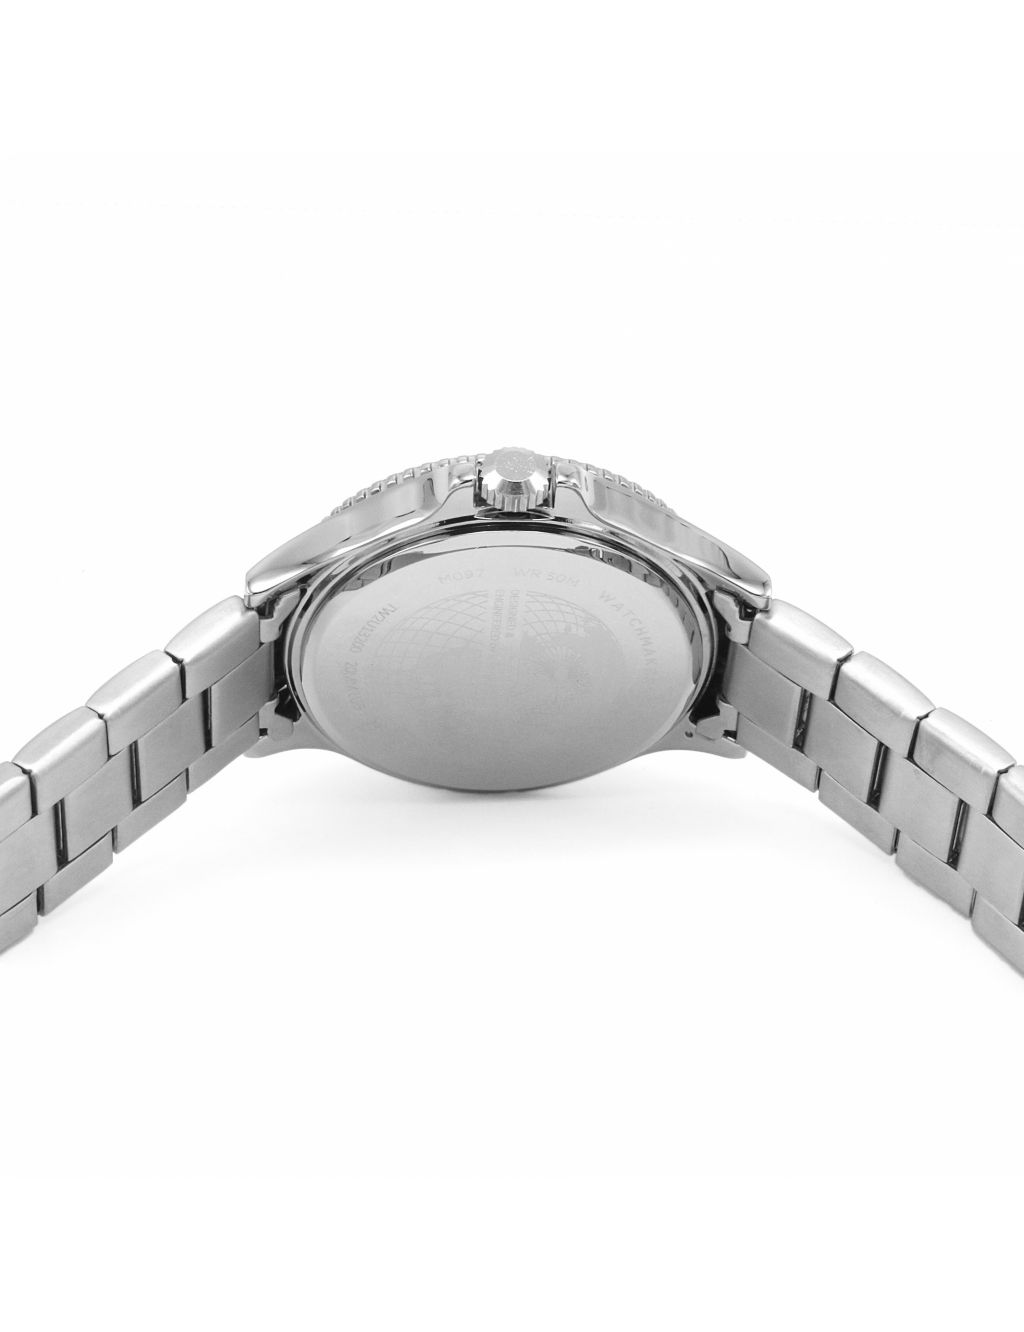 Timex Metropolitan Stainless Steel Chronograph Watch image 7